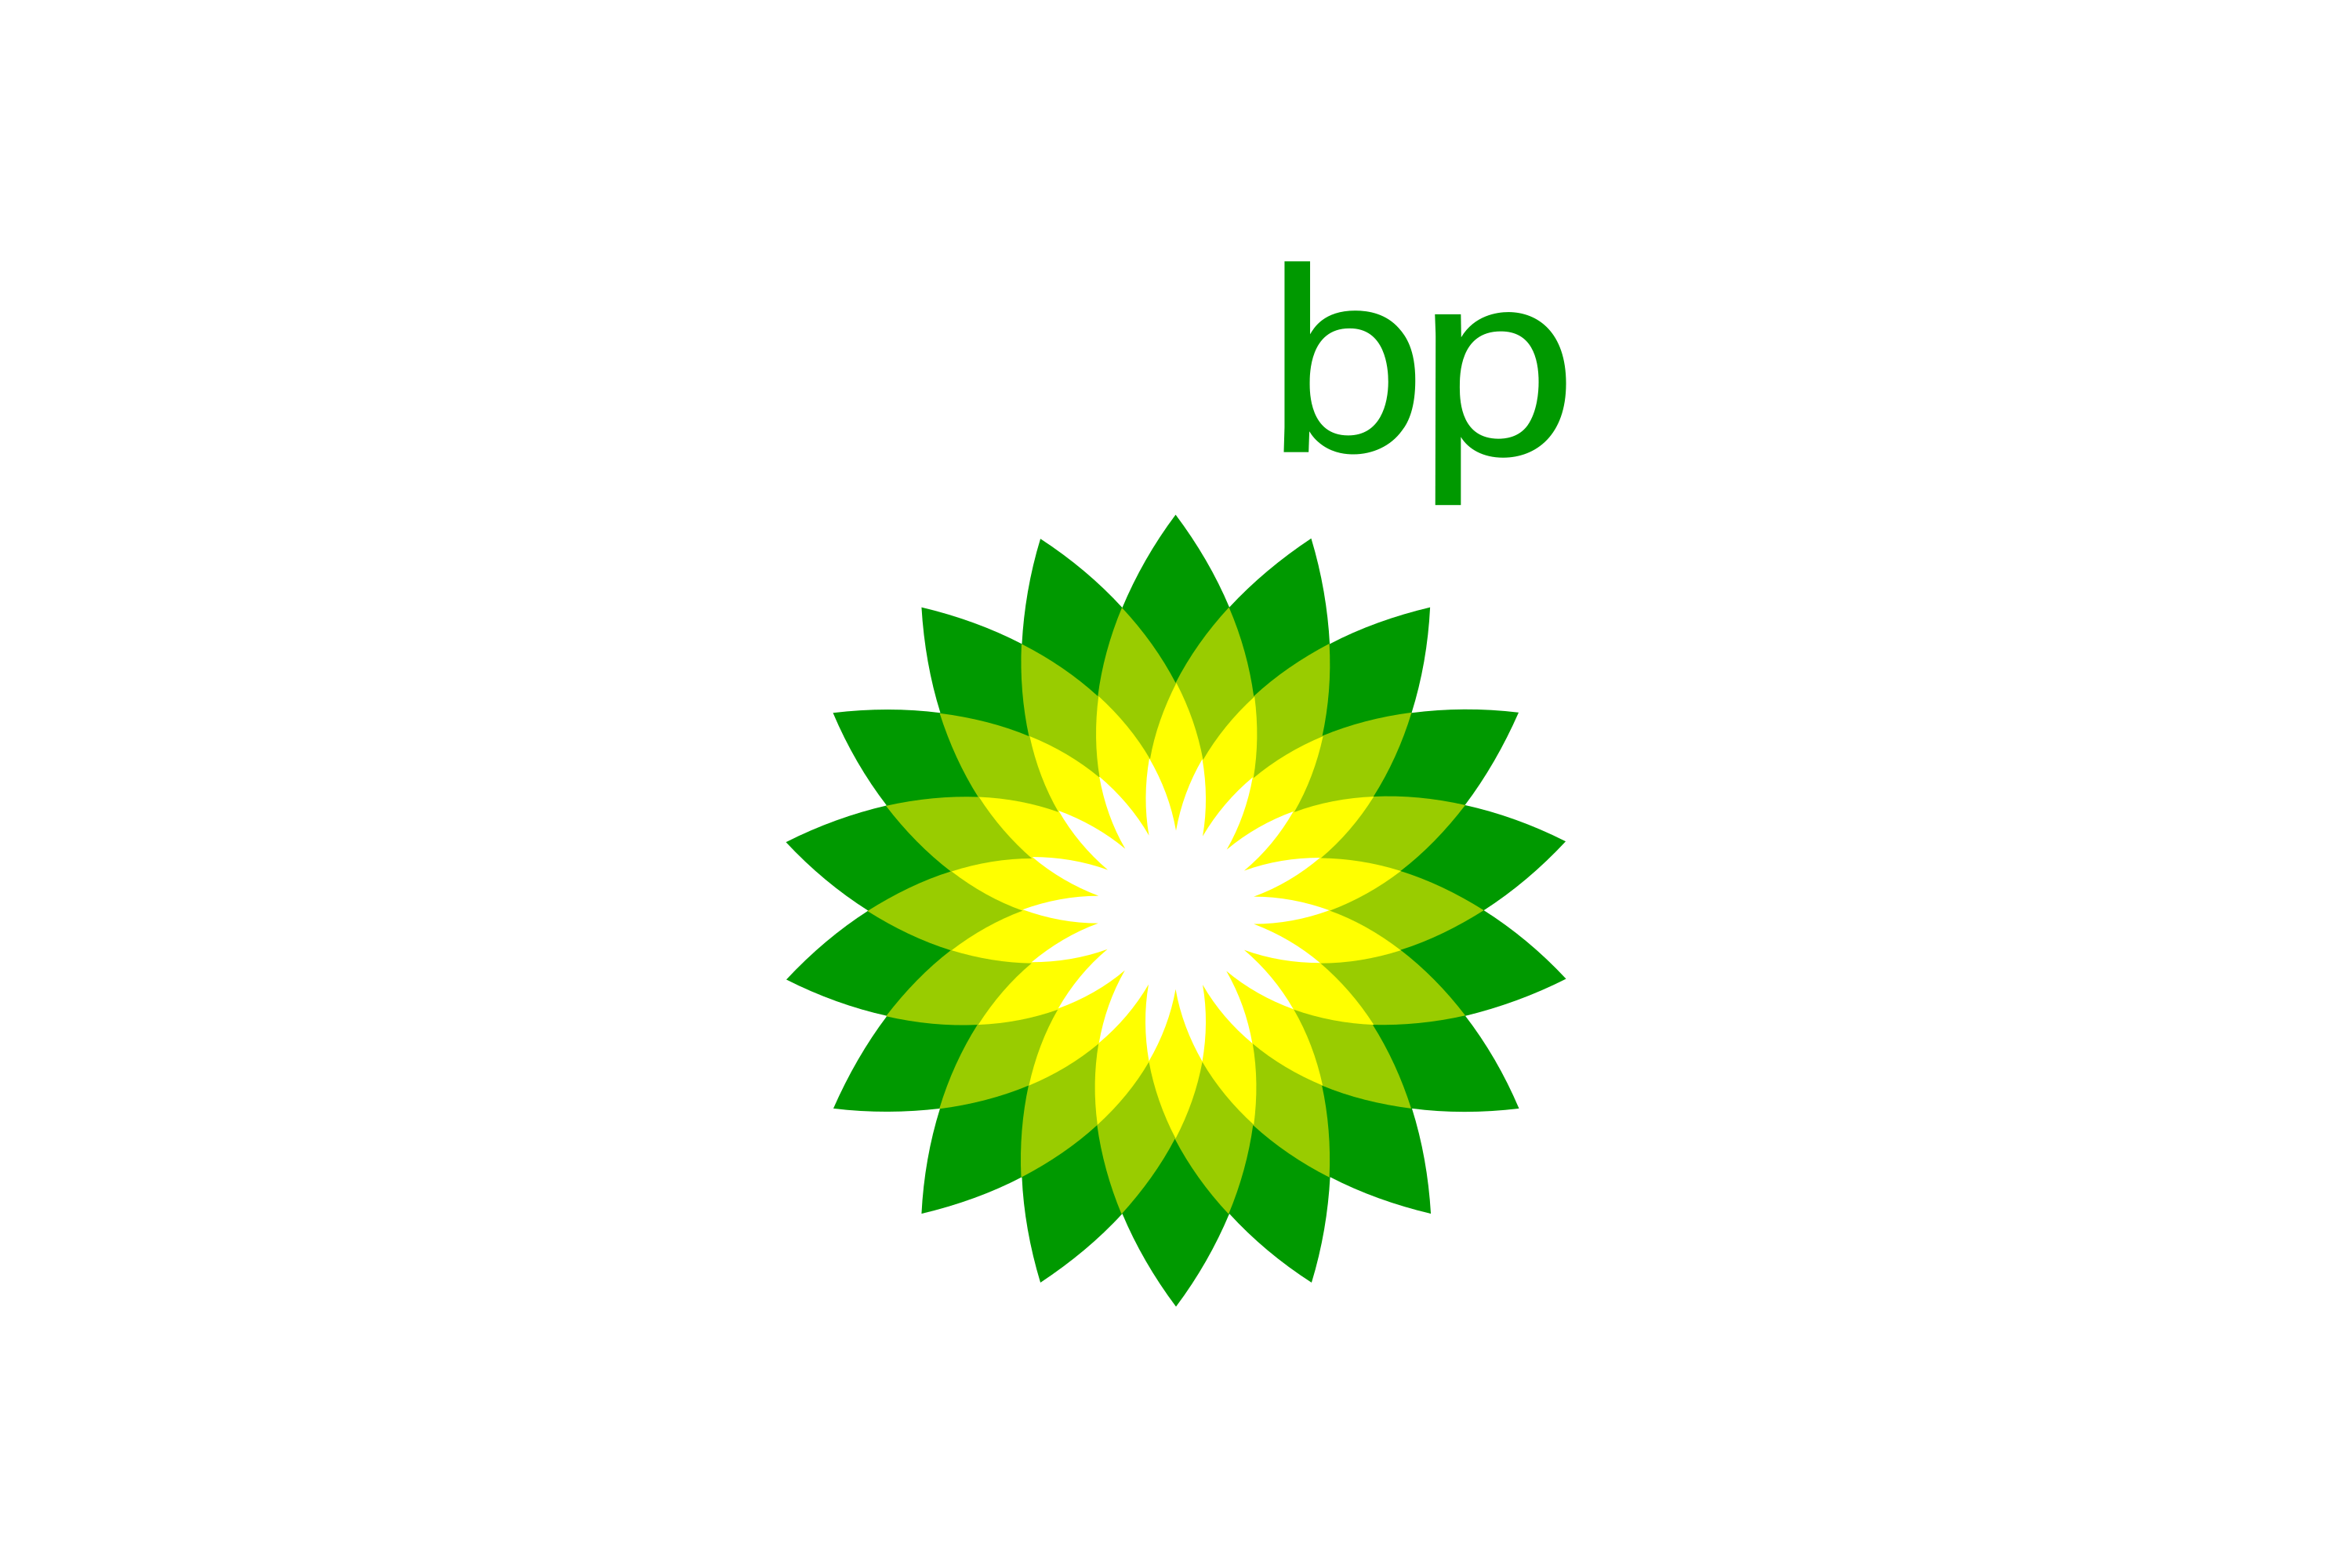 Download BP (British Petroleum) Logo in SVG Vector or PNG File Format